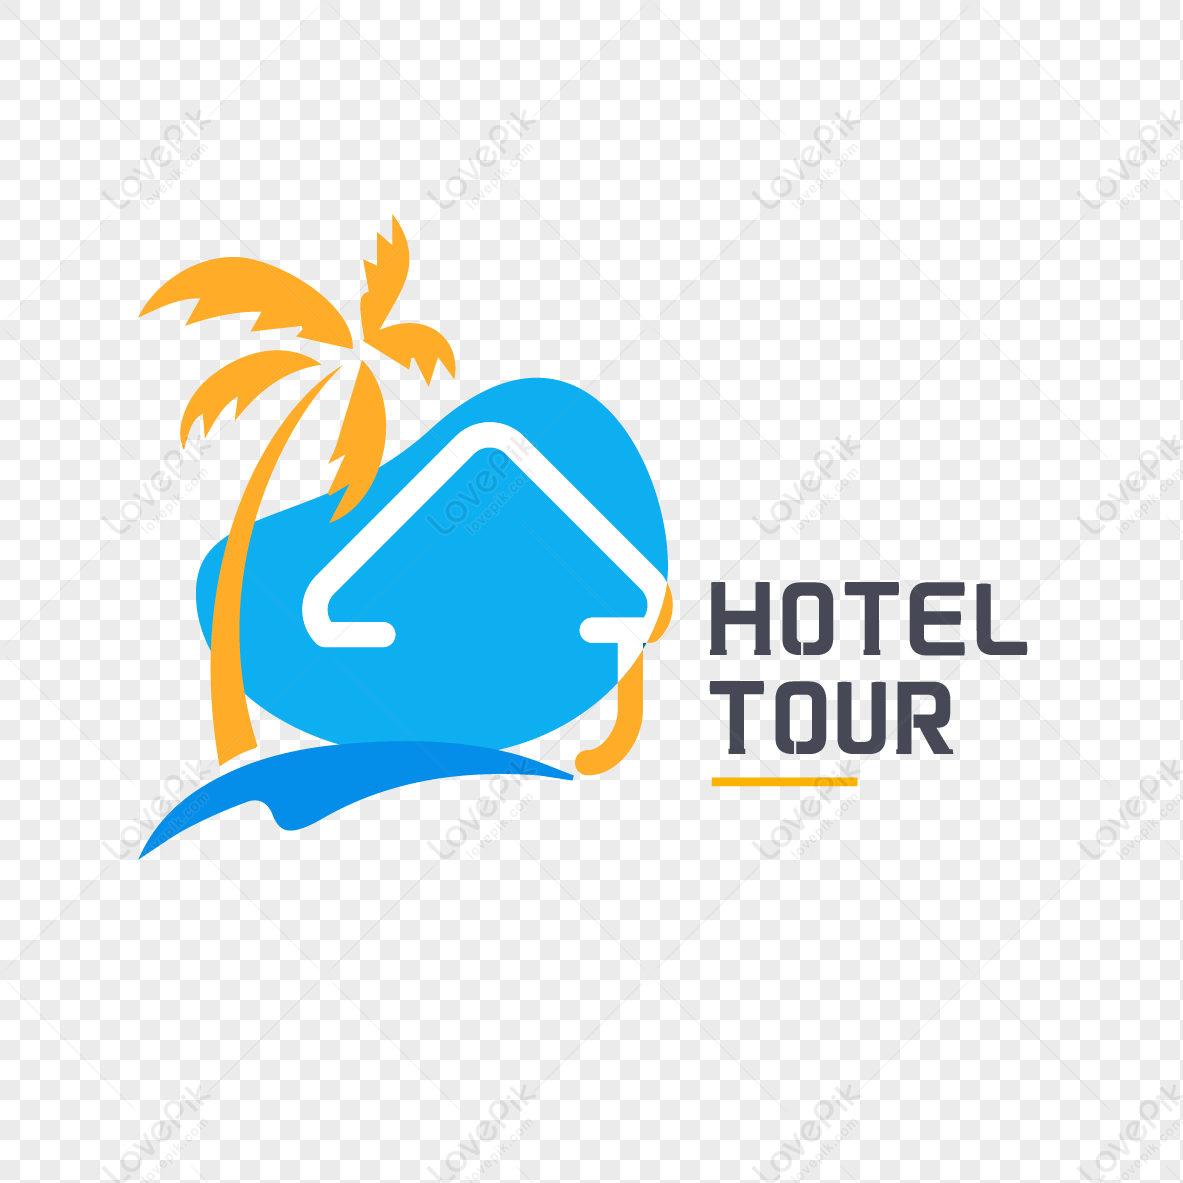 Hotel travel logo, logo, simplicity, travel logo png image